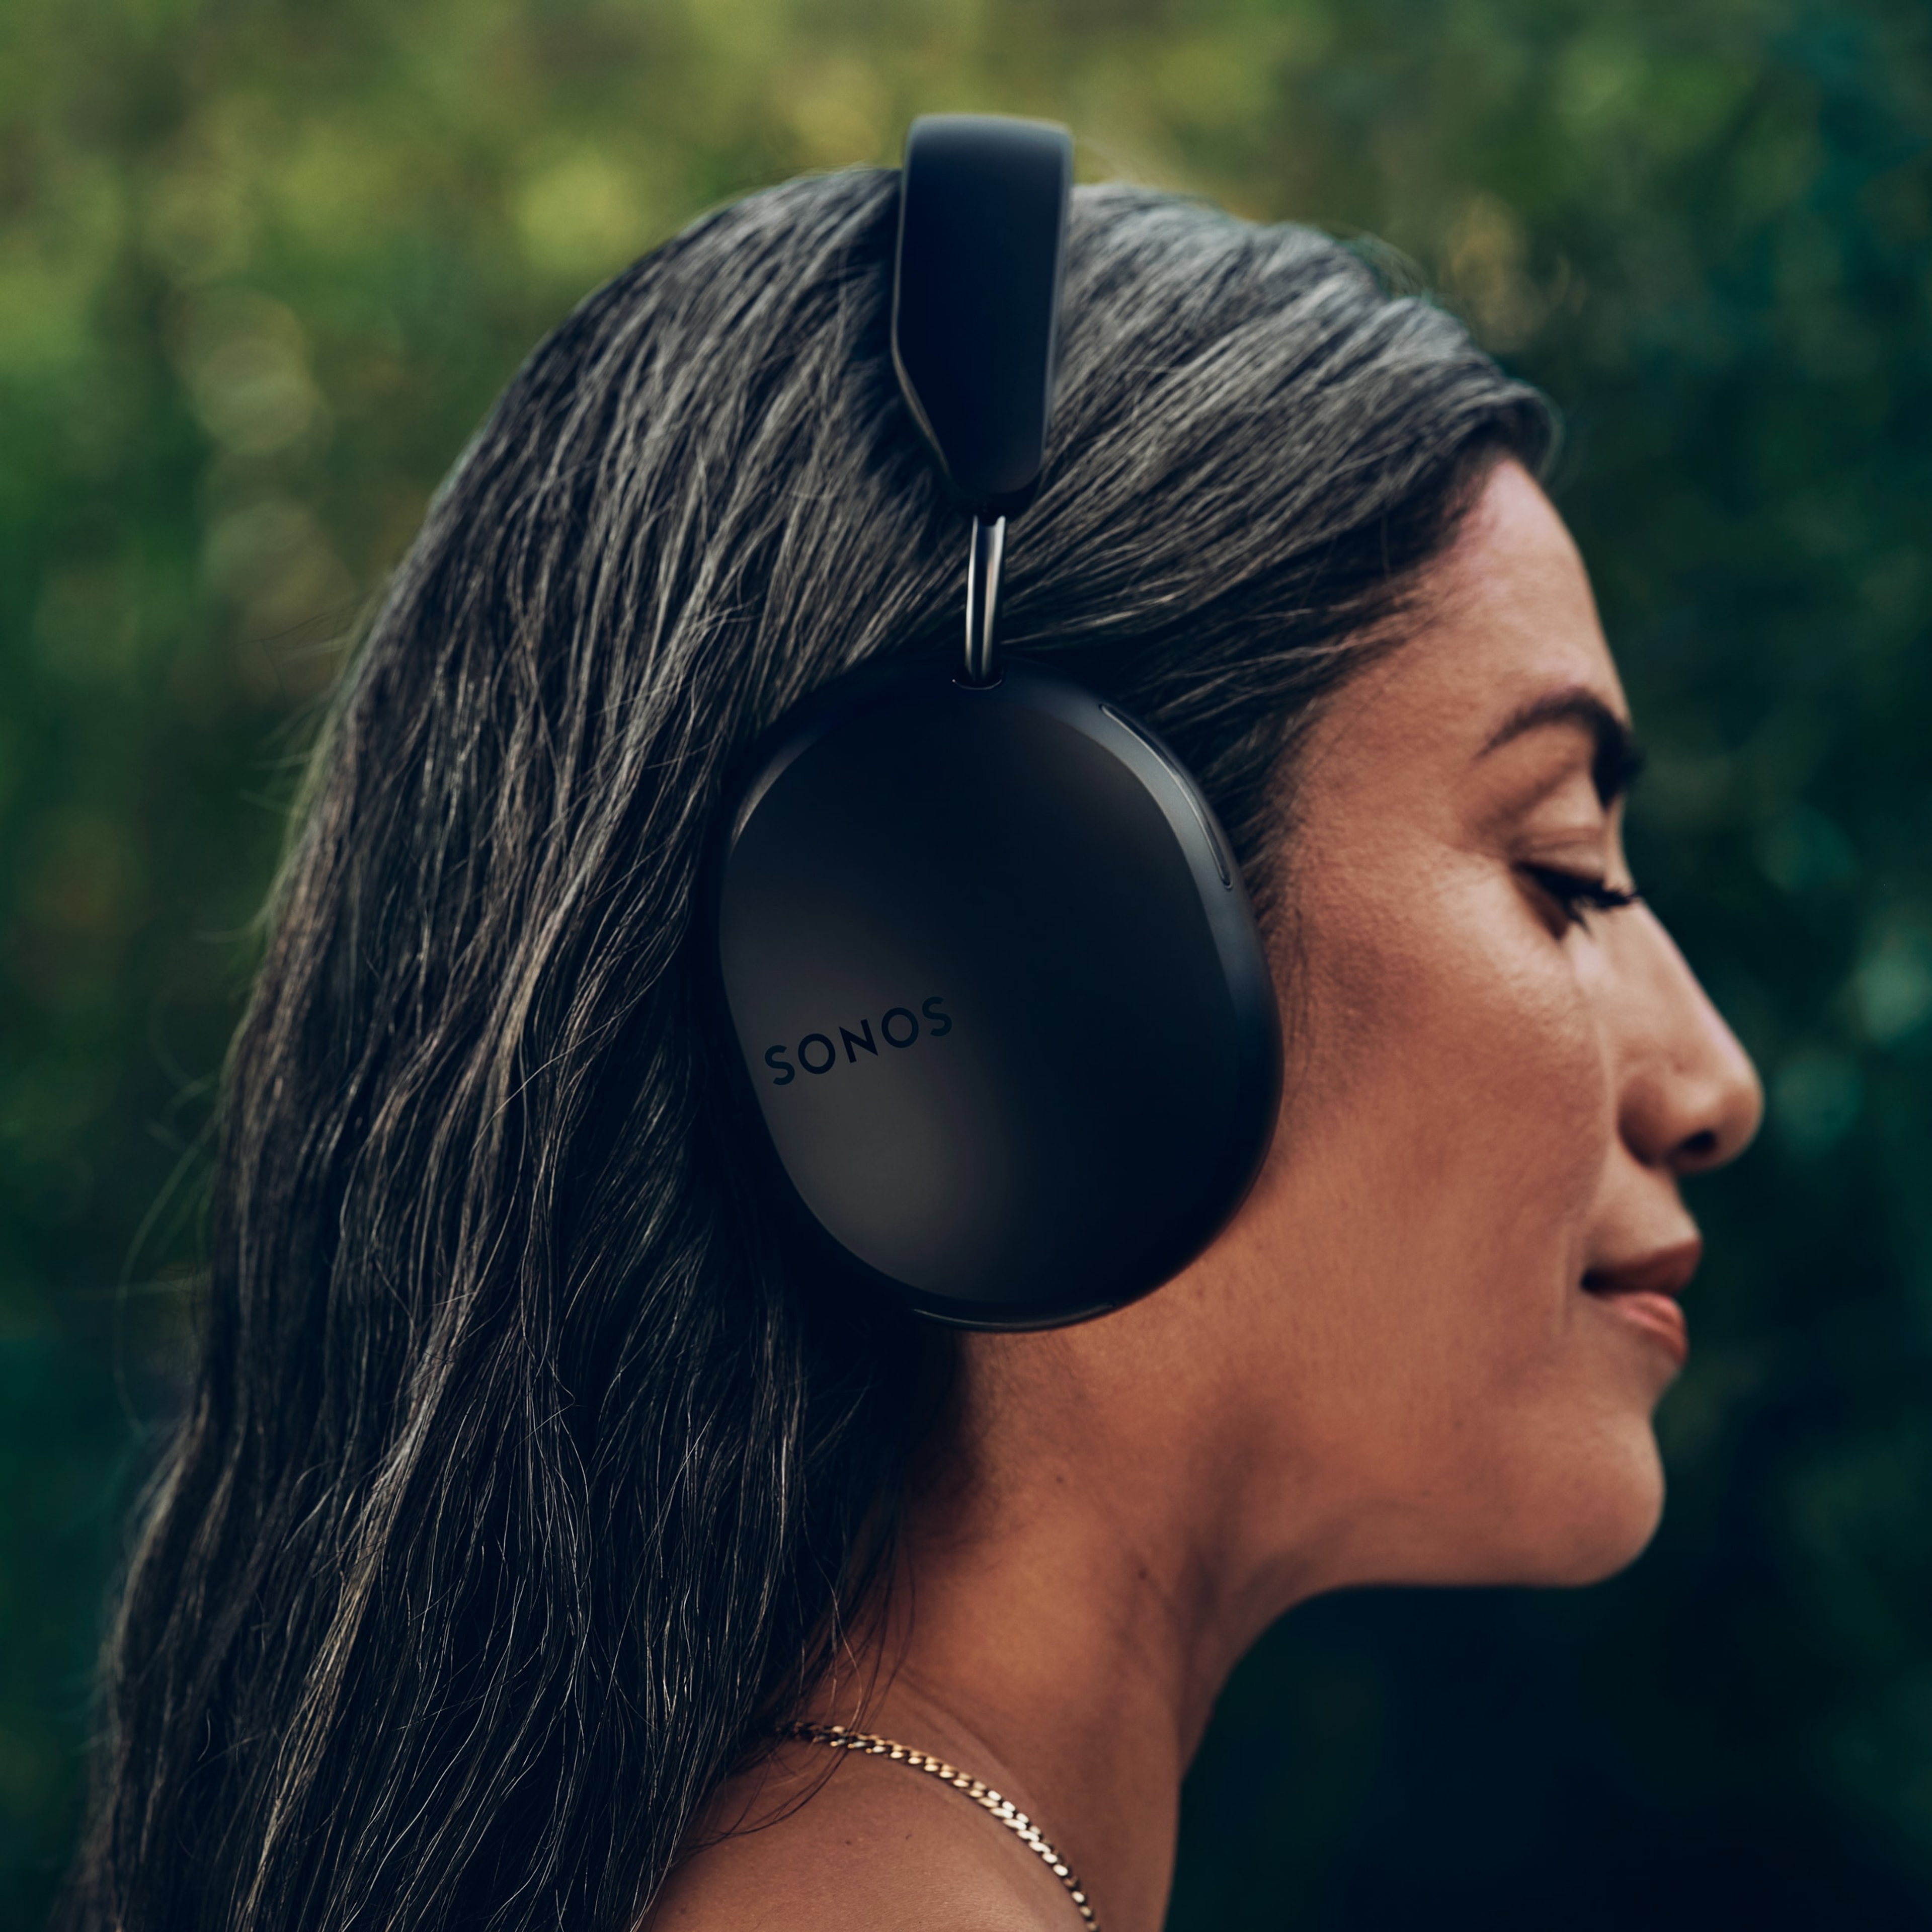 Side profile of female user wearing a pair of black Sonos Ace headphones